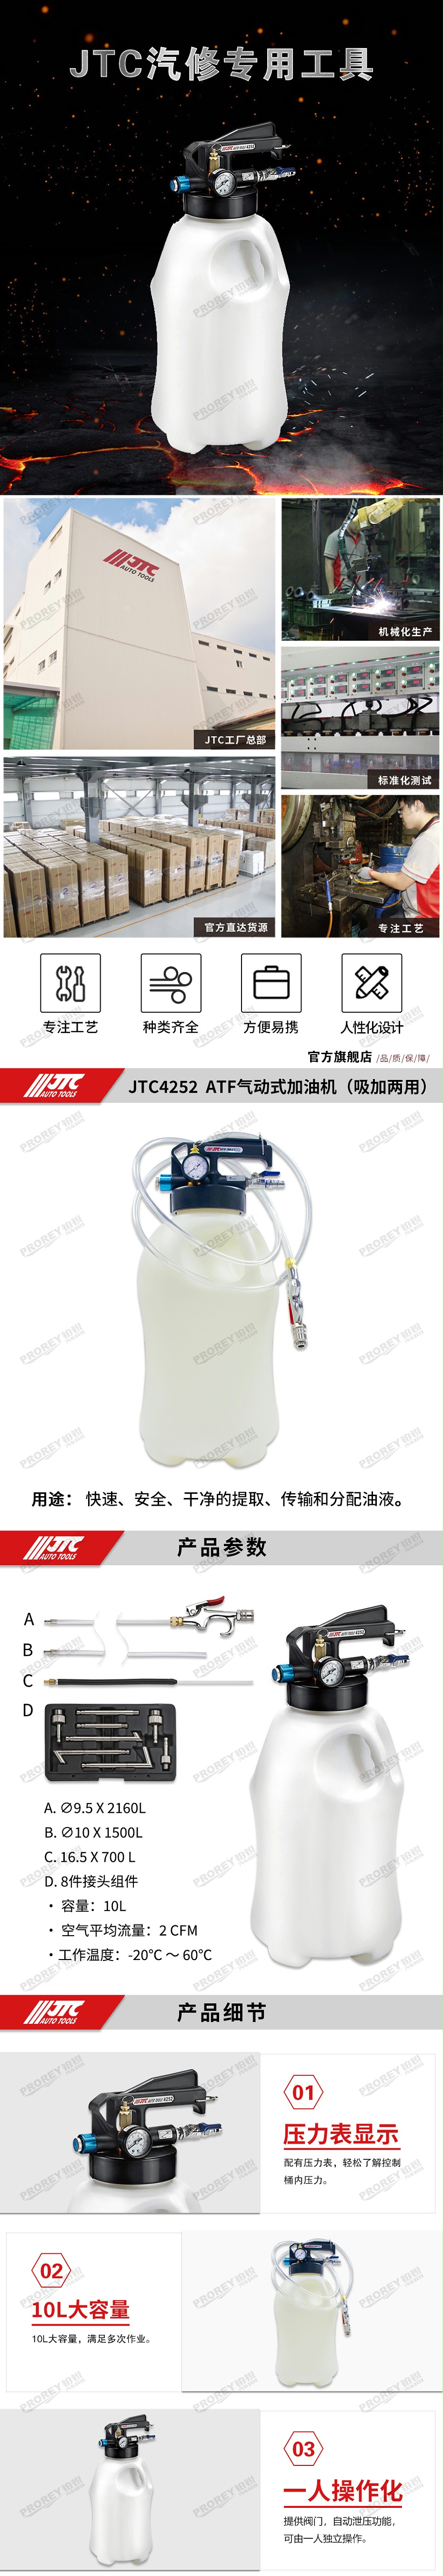 GW-170030002-JTC 4252 ATF气动式加油机（吸加两用）